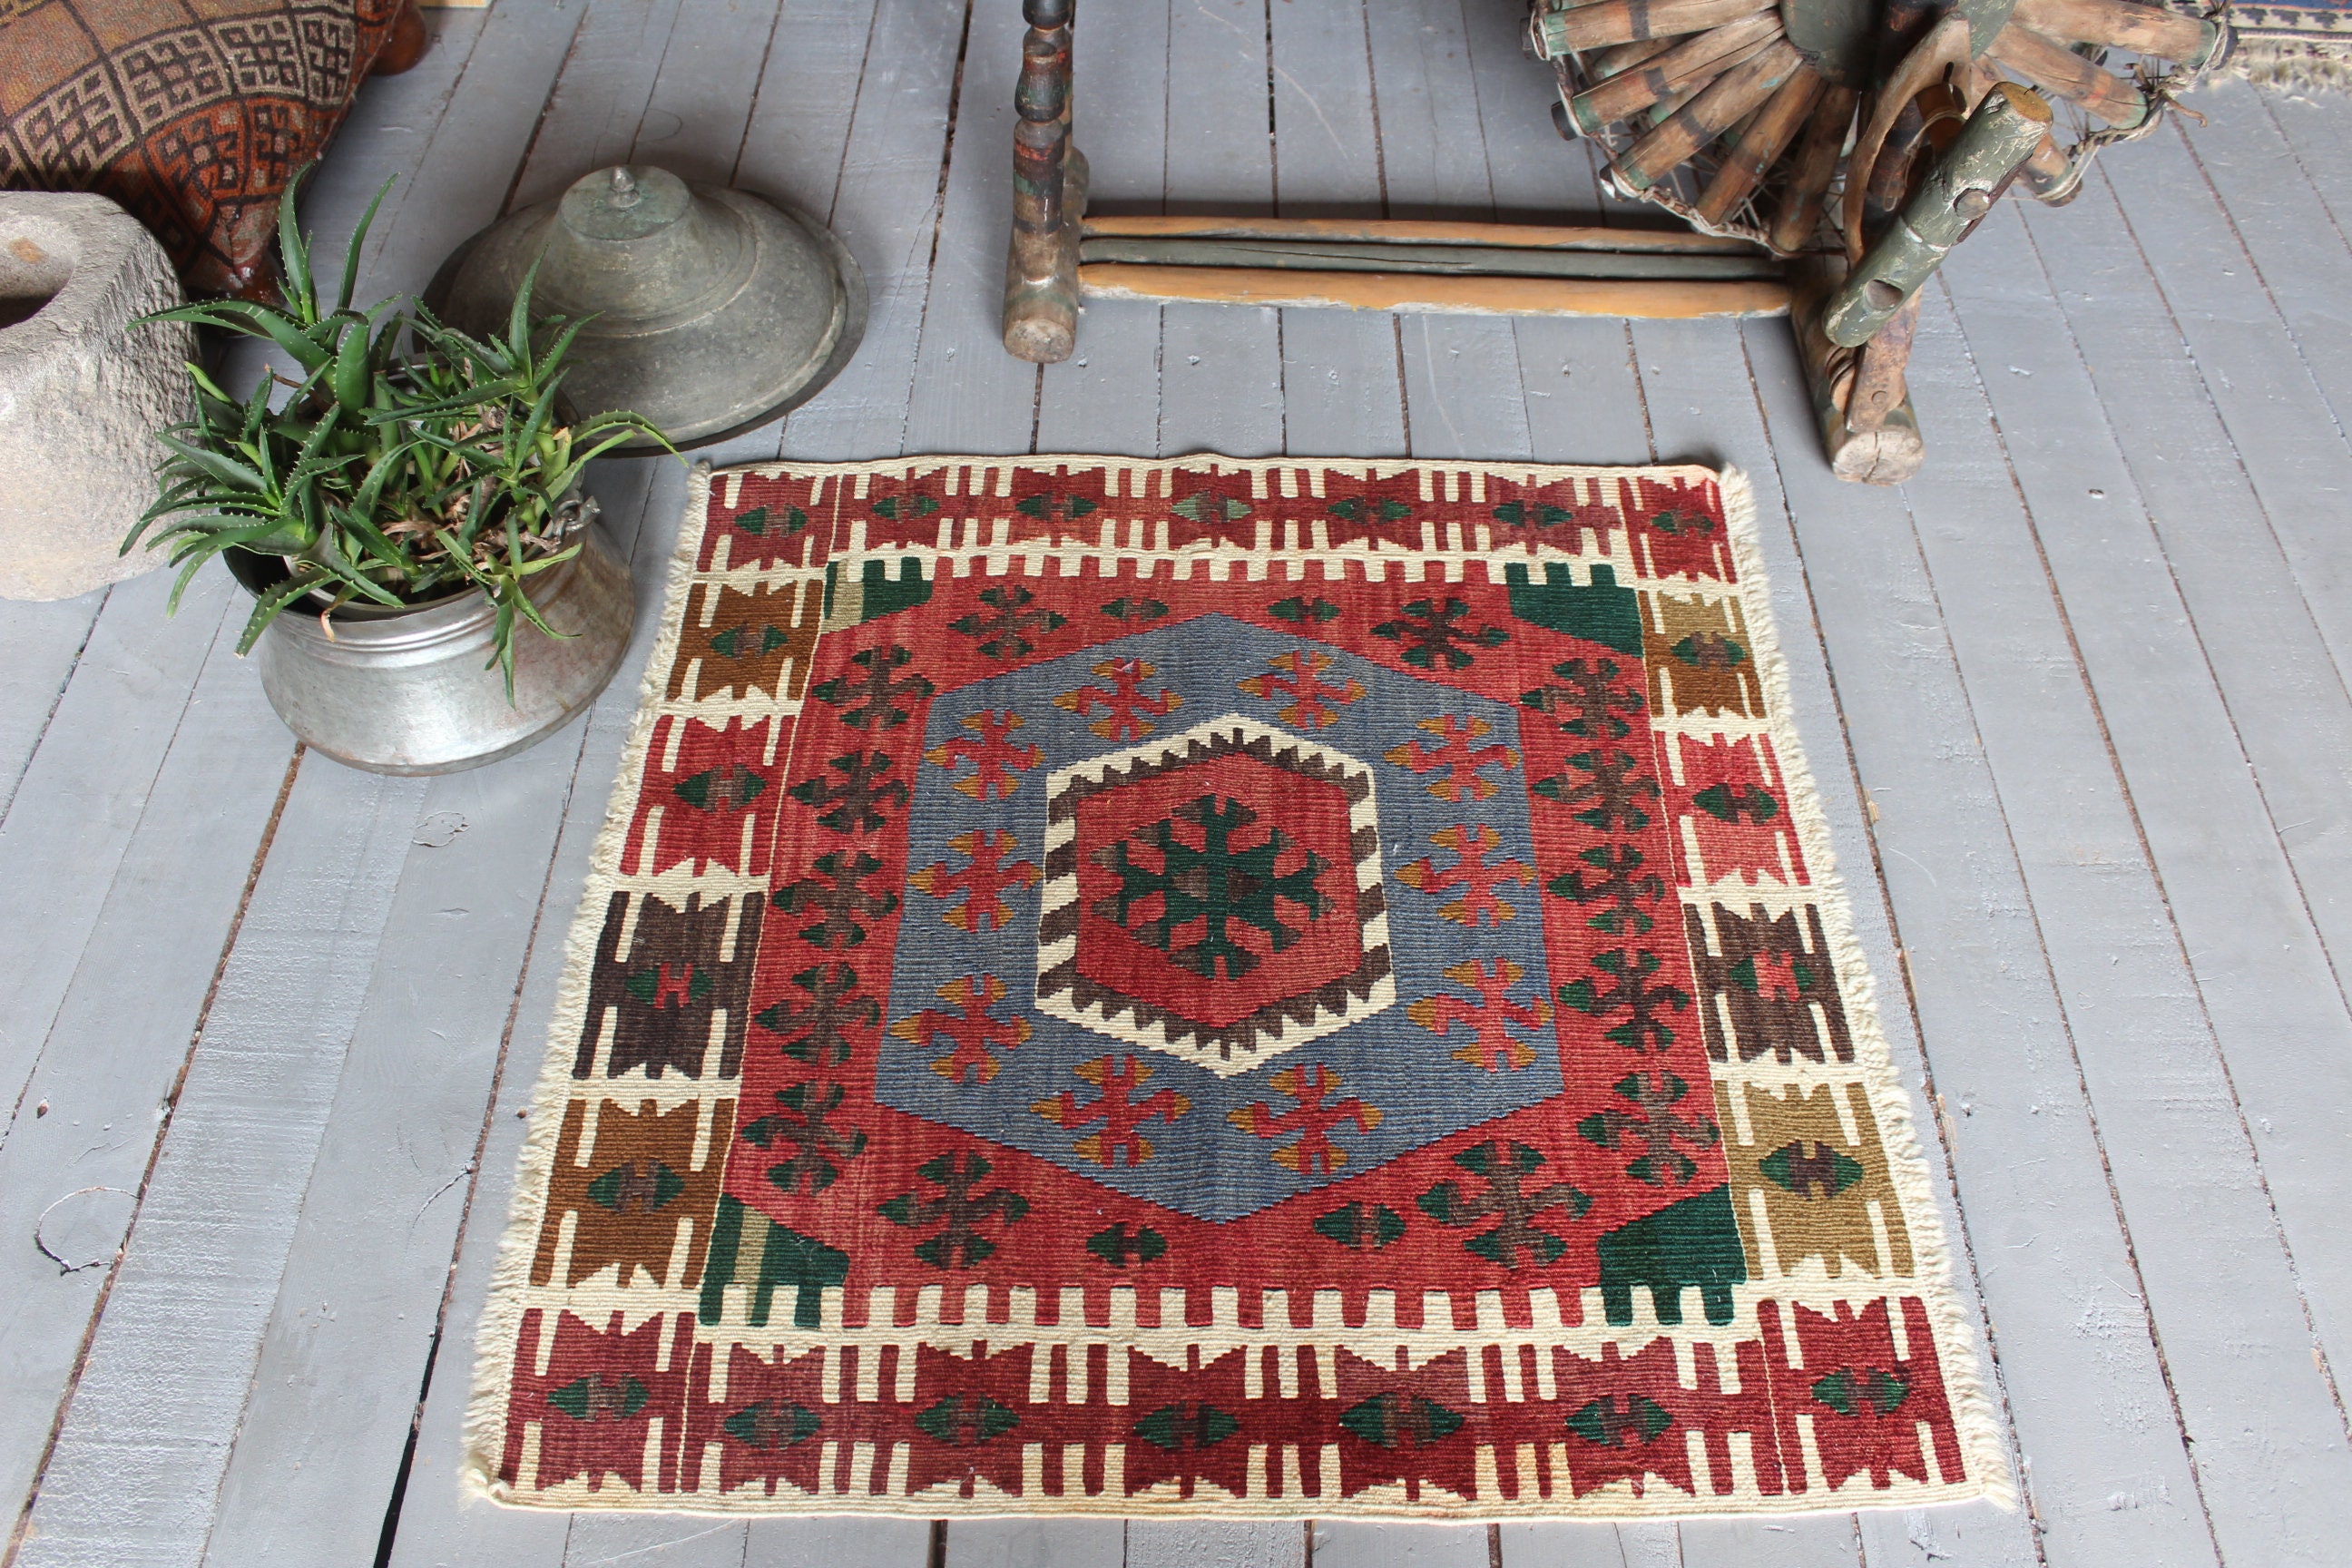 2'4x2'6 Ft Vintage Turkish Kilim Rug, Ethnic Kilim, Small Bohemian Aztec Design Red Kilim Doormat"